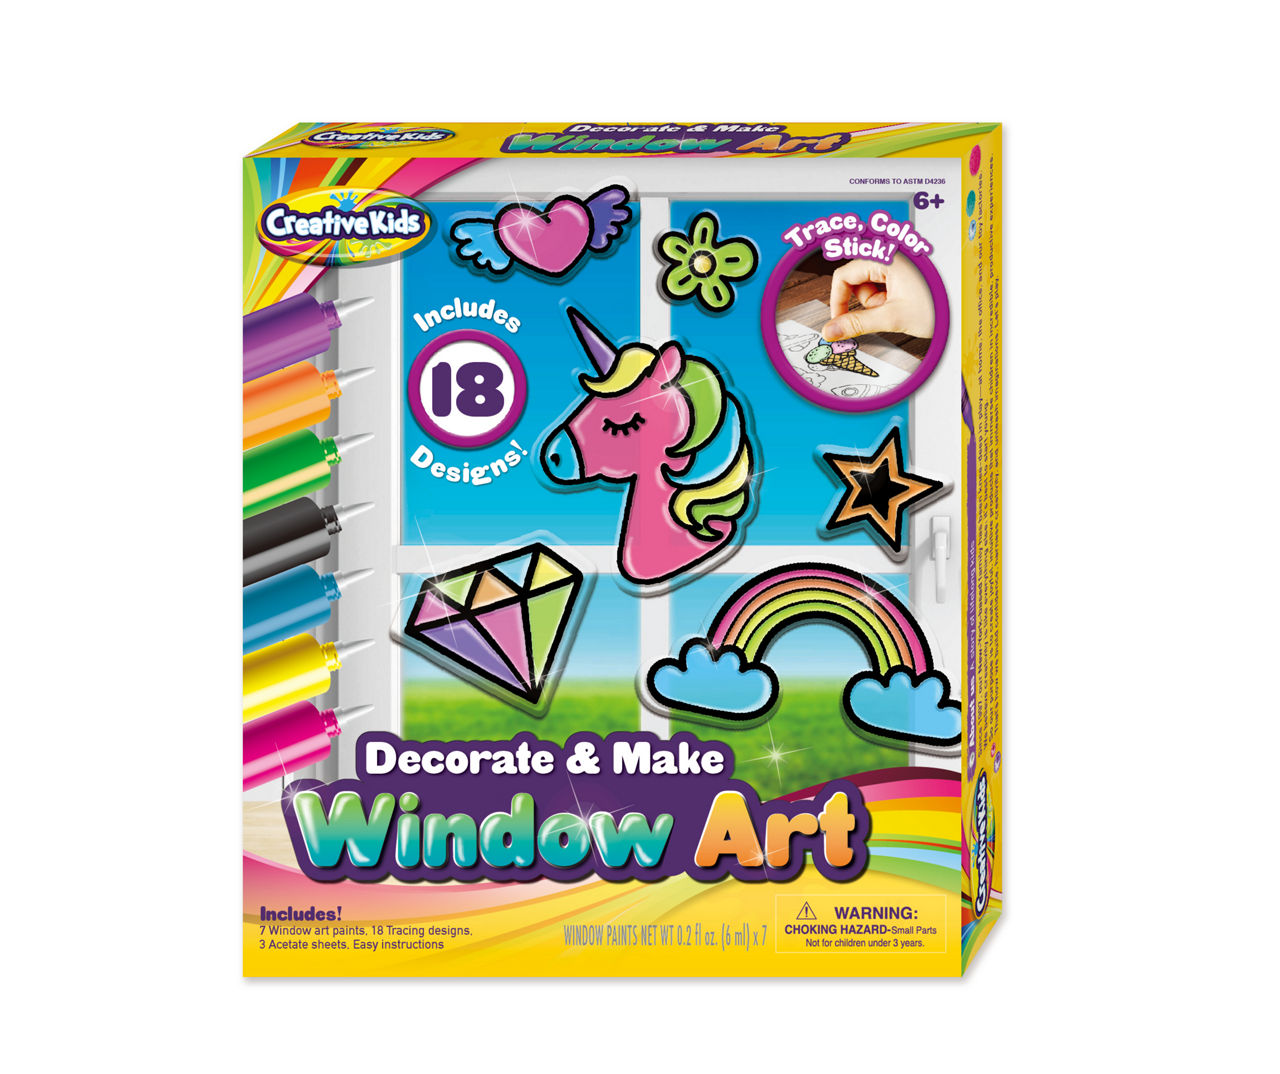 Creative Kids Deluxe Window Art Kit! 